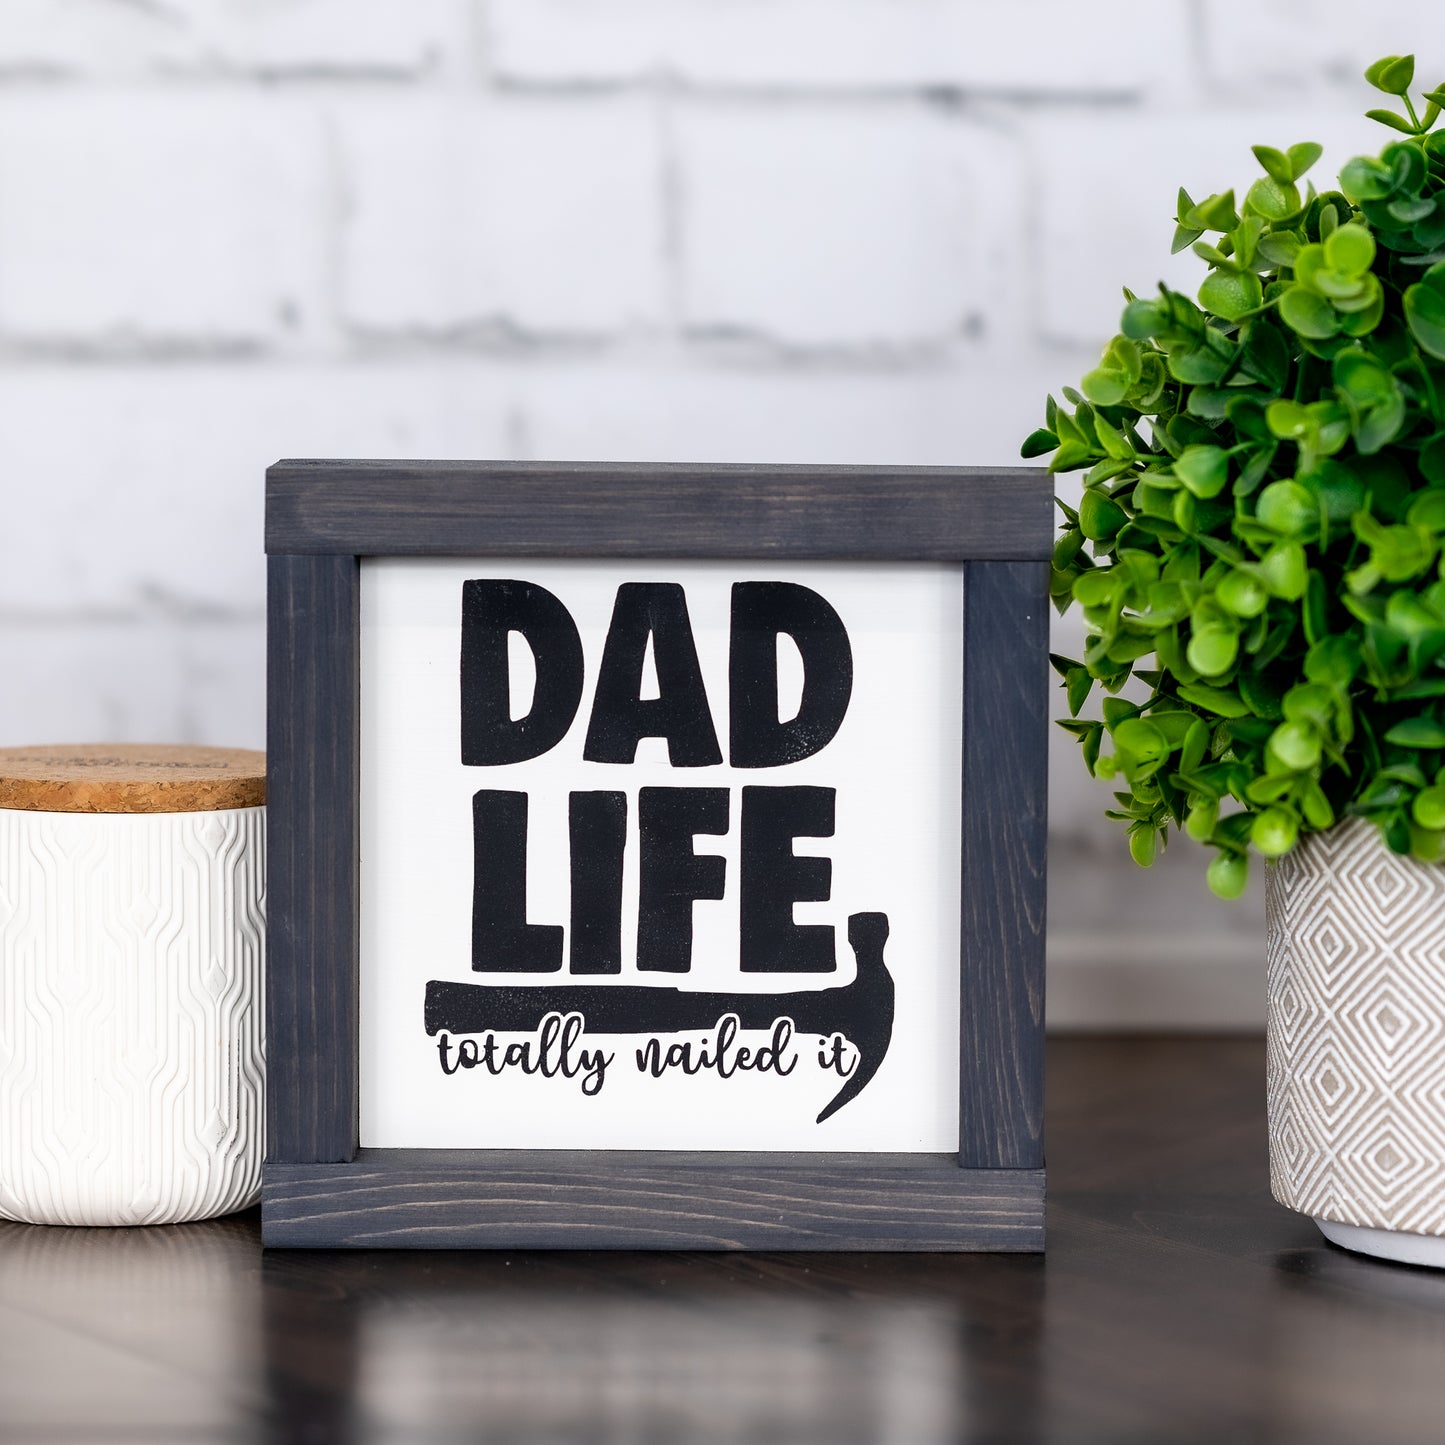 dad life, totally nailing it - mini sign